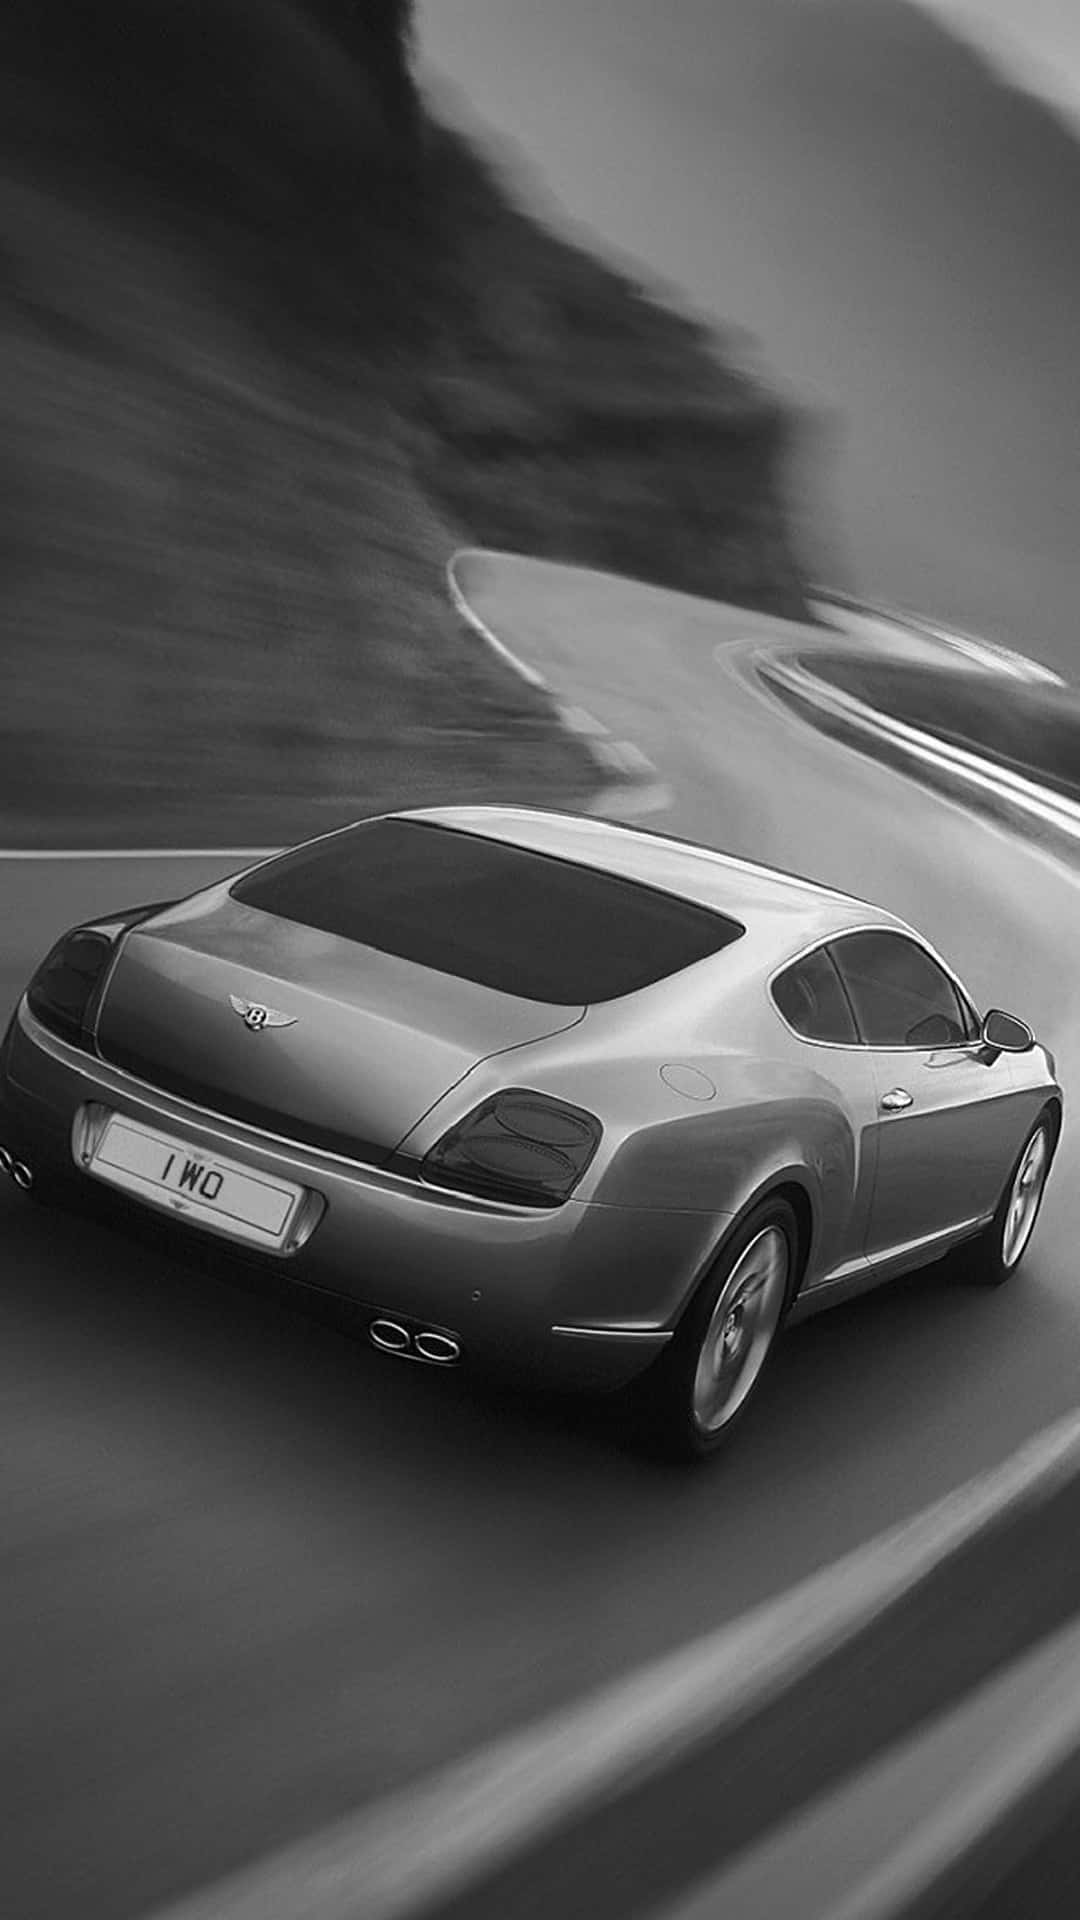 Velocidad2017 Modelo De Bentley Para Iphone Fondo de pantalla